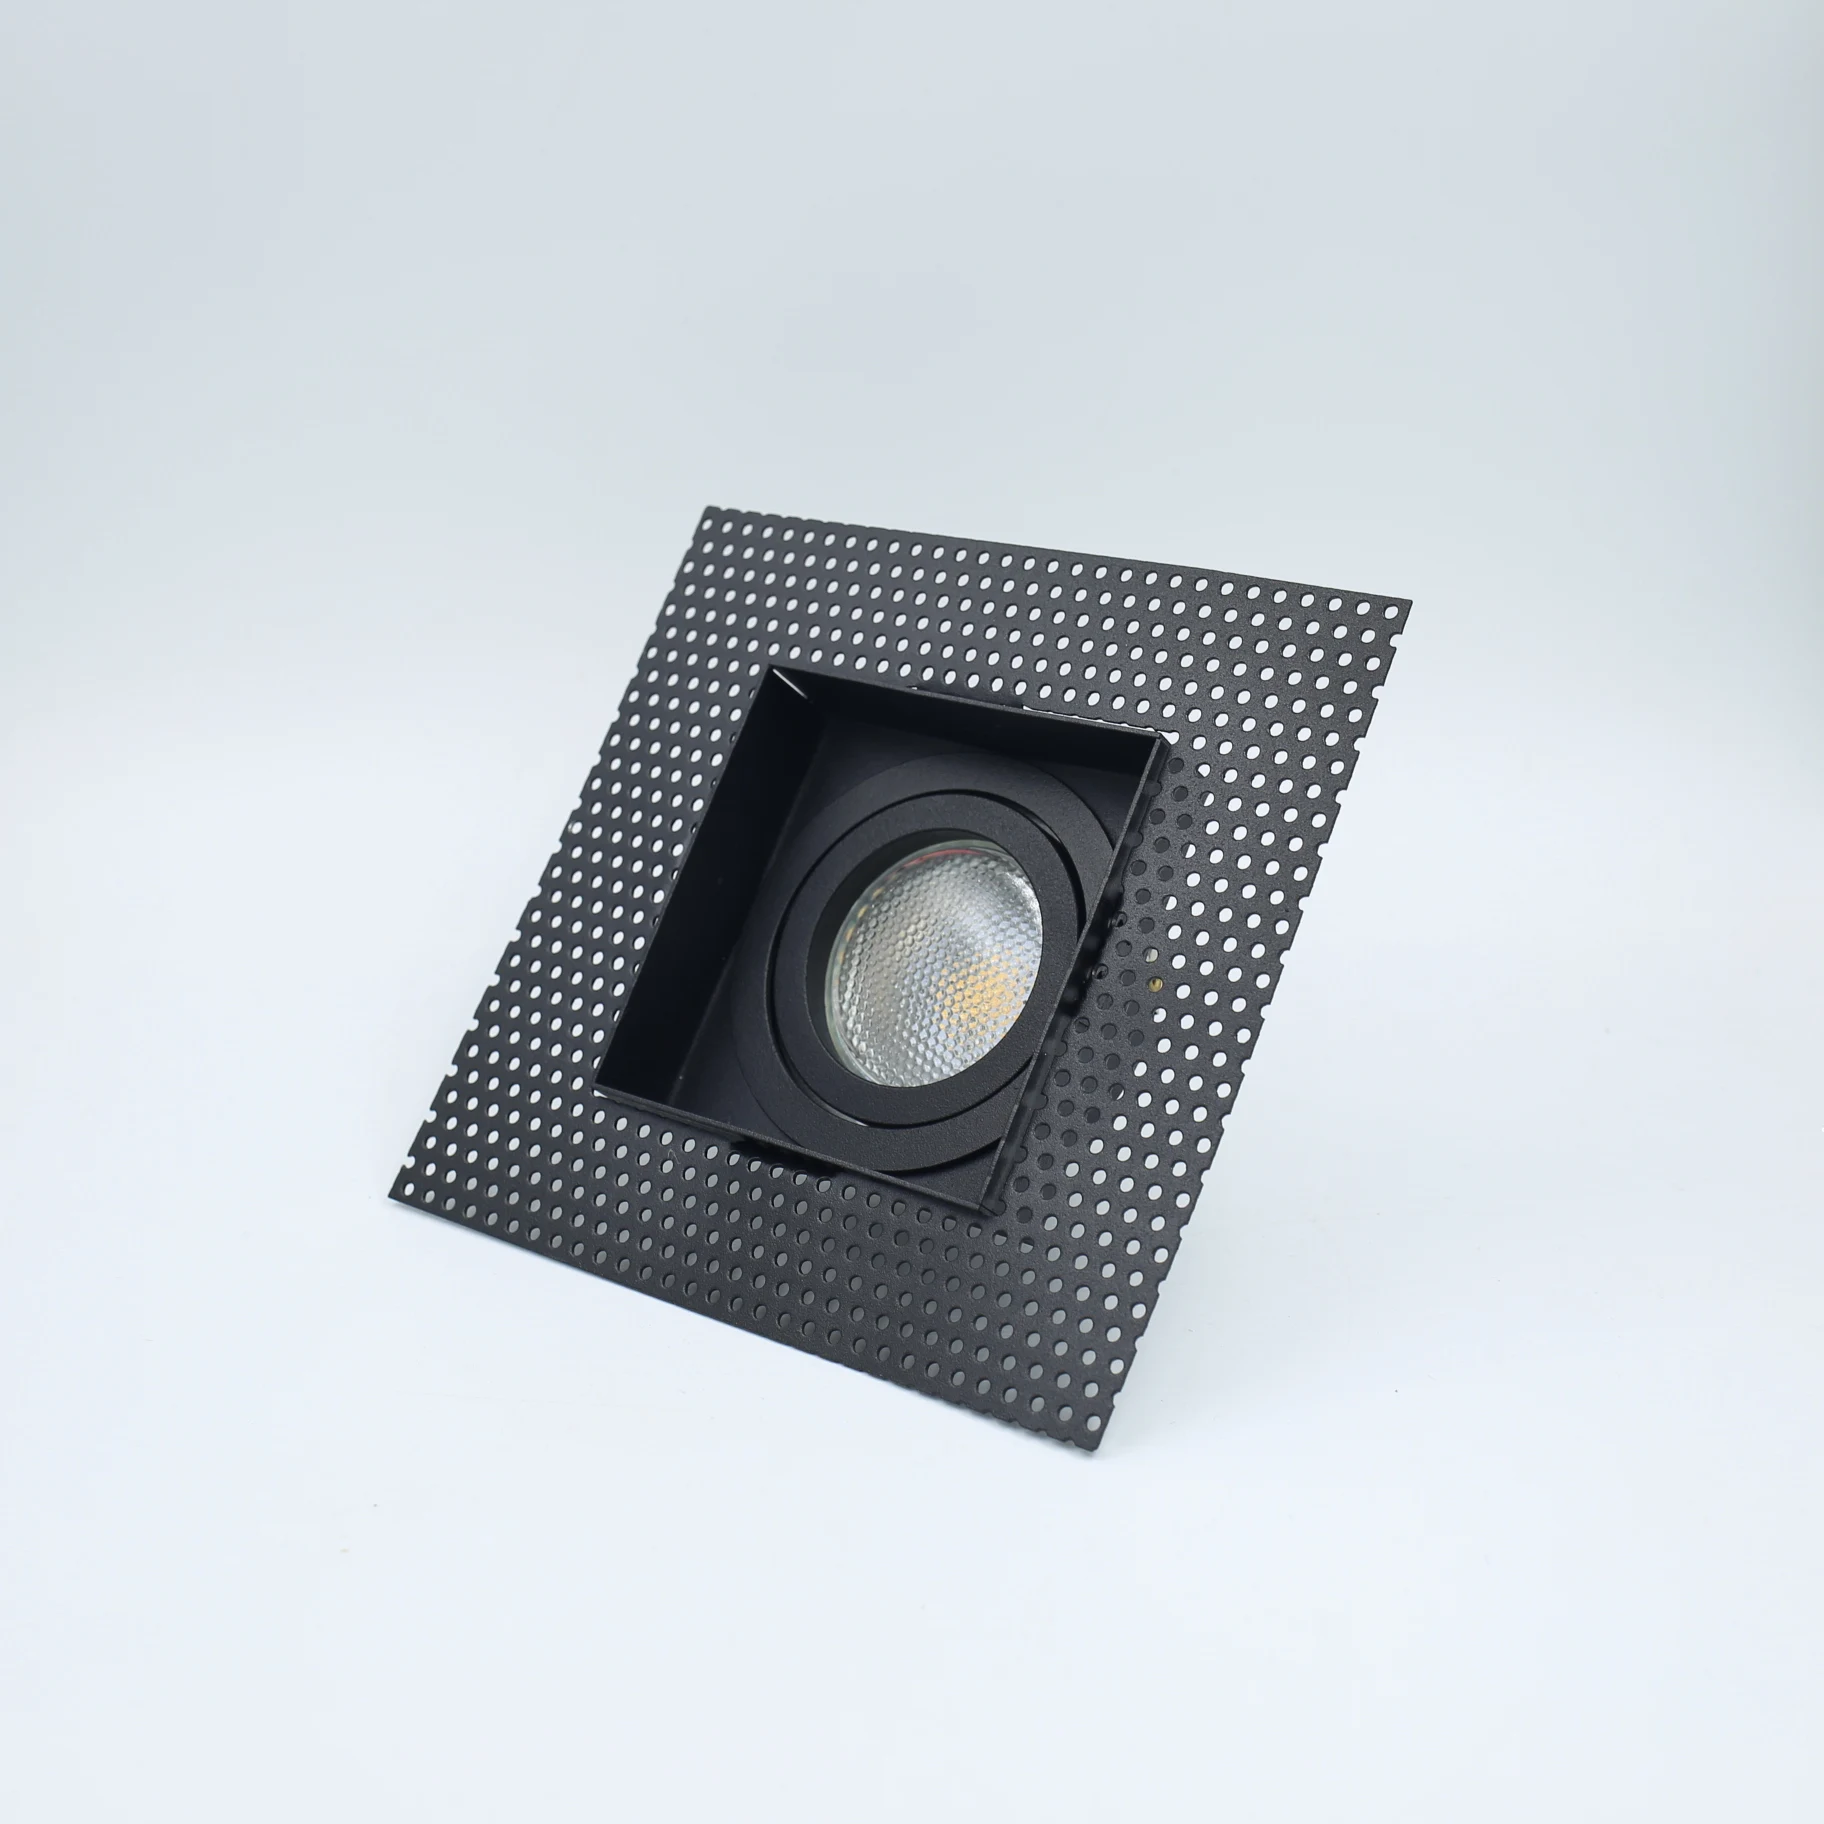 New Products Trimless downlight Recessed Square Gu10 Down Light Ultra Slim 7W Anti Glare Led Spotlight Frame